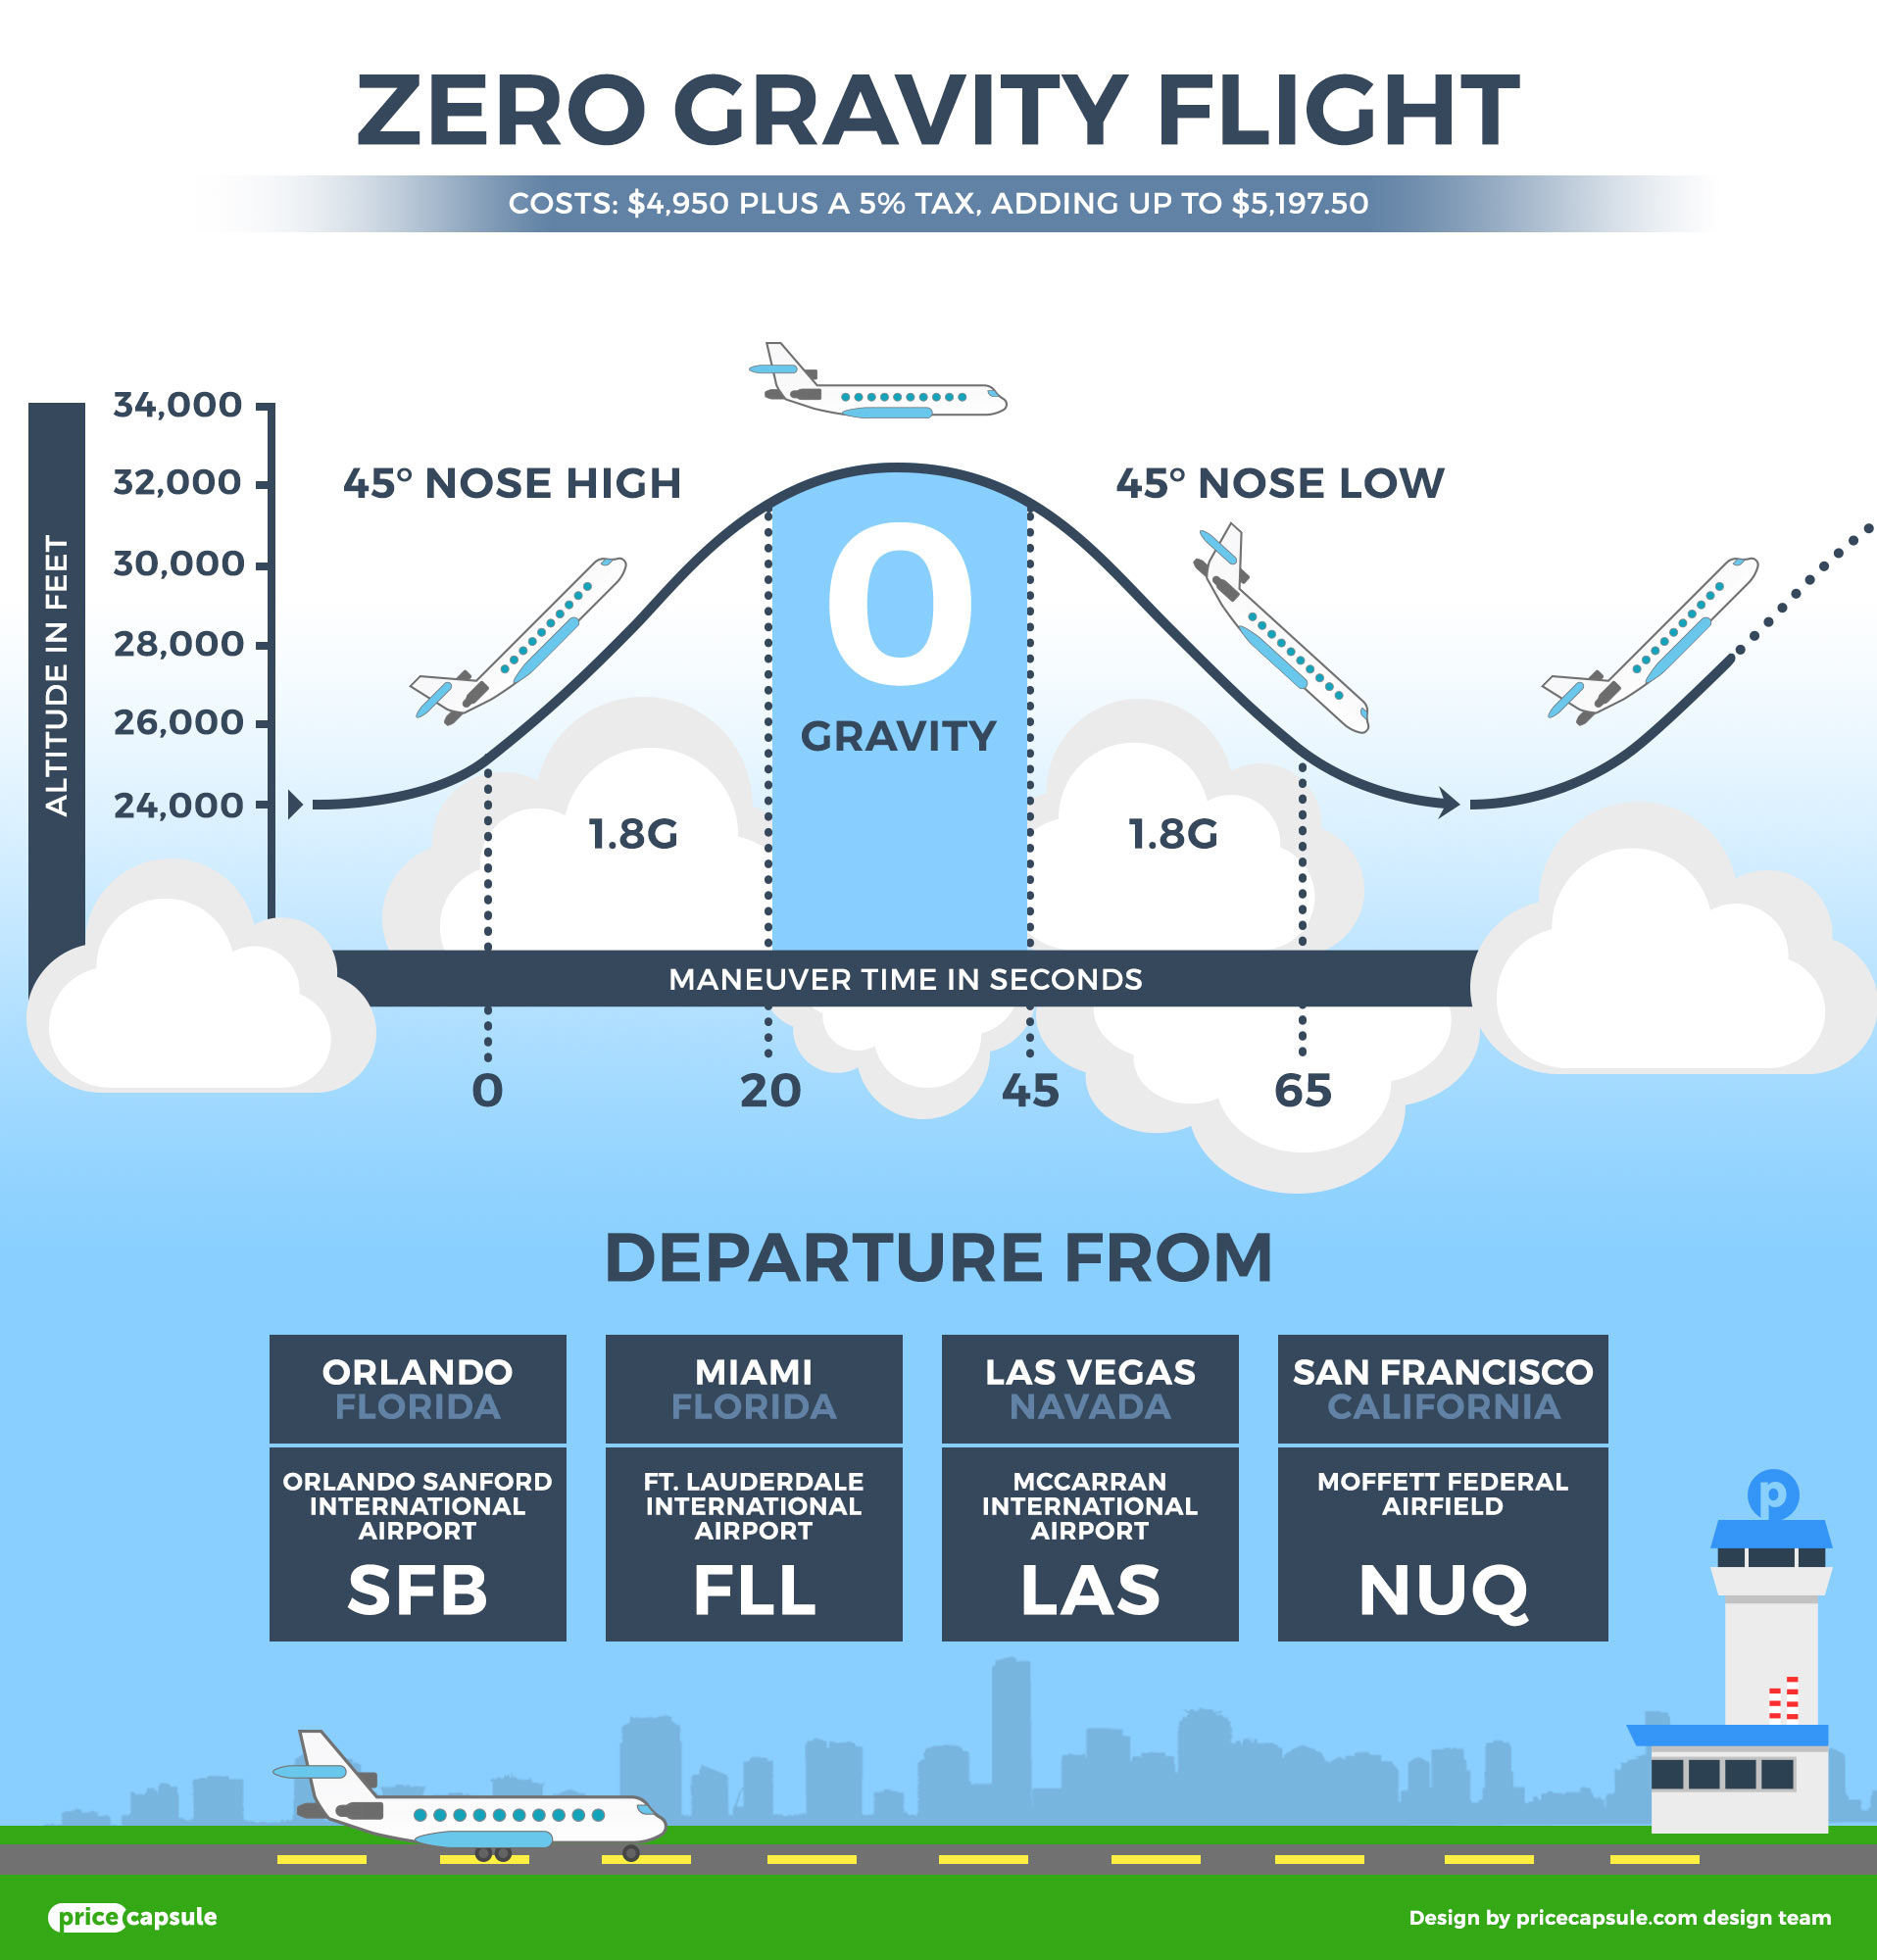 Zero gravity flight cost - PriceCapsule.com